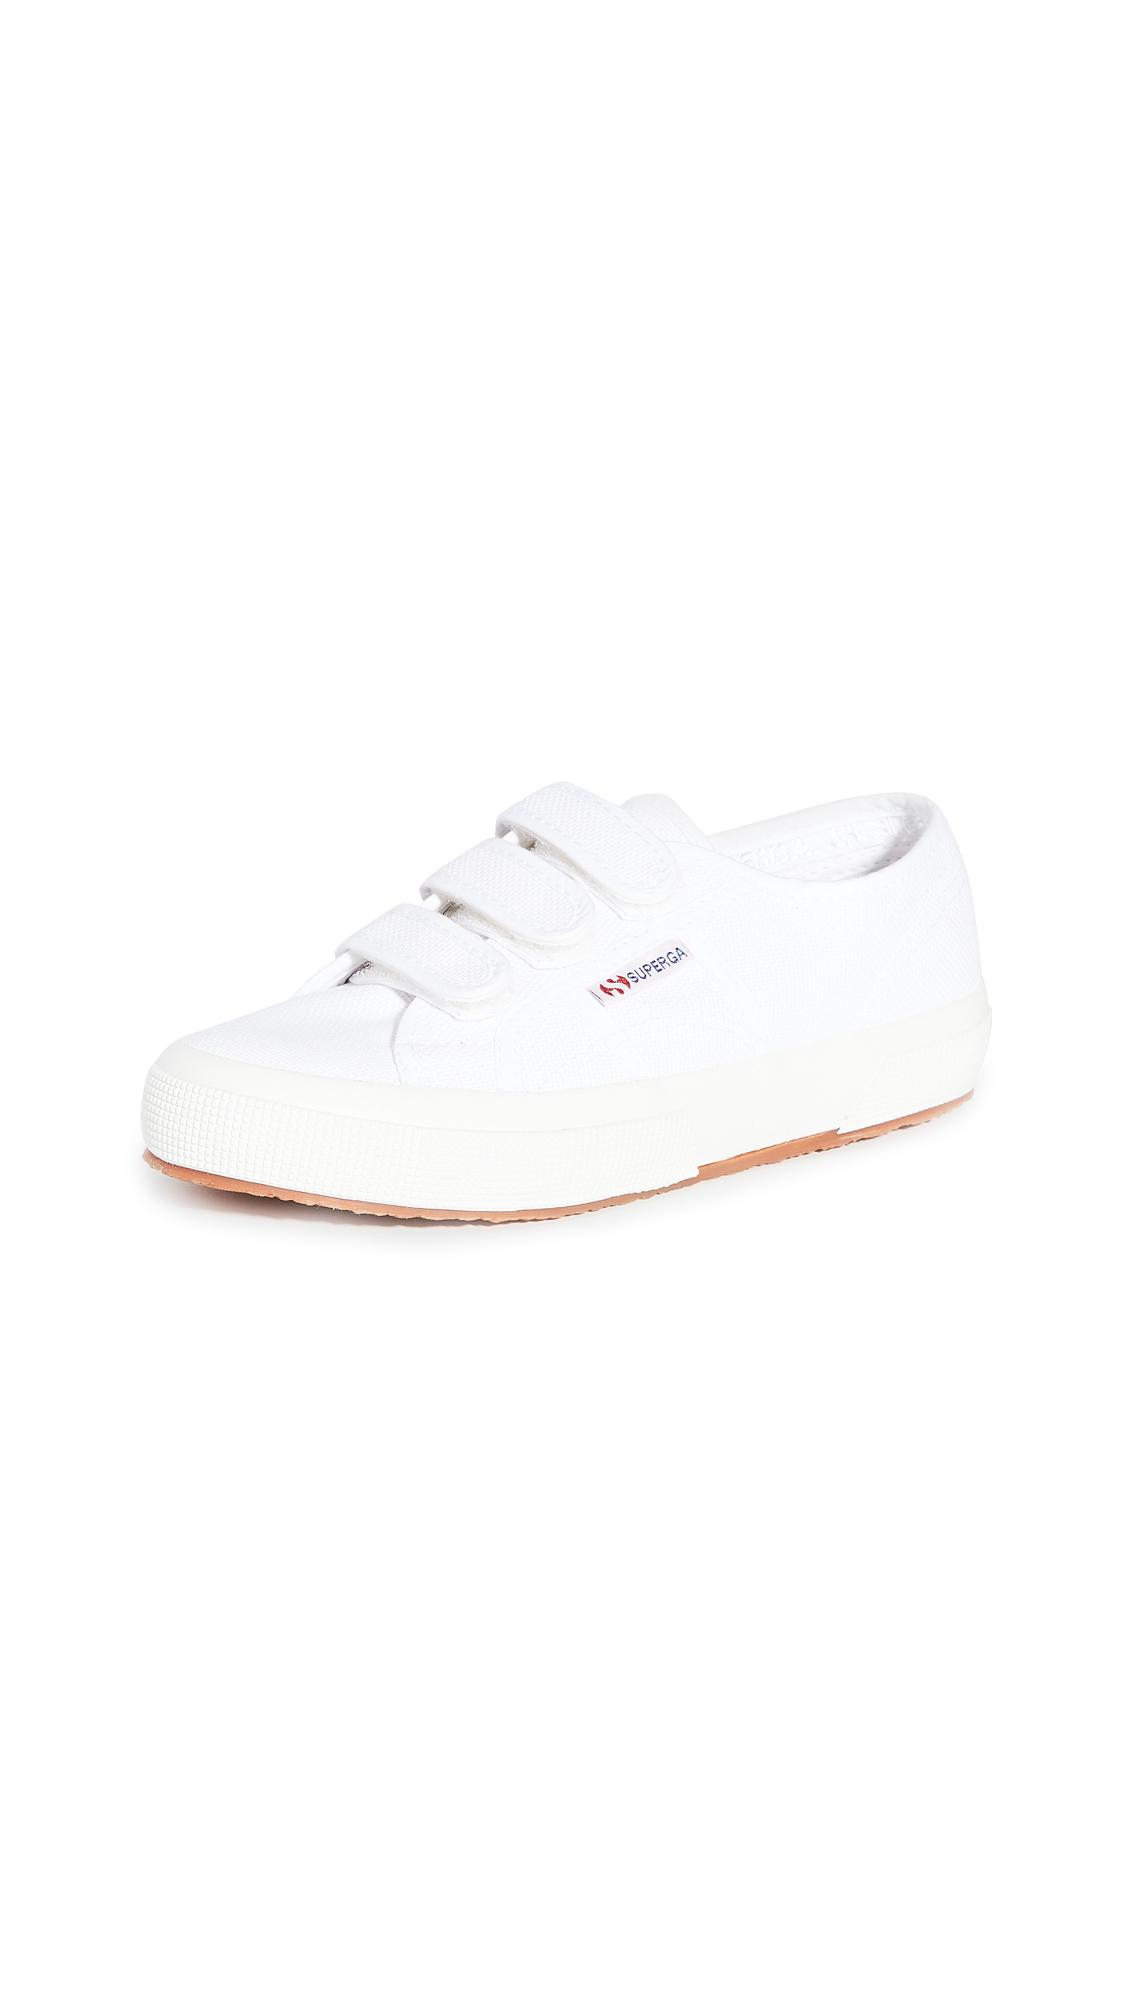 Superga 2750 Velcro Sneakers in White | Lyst